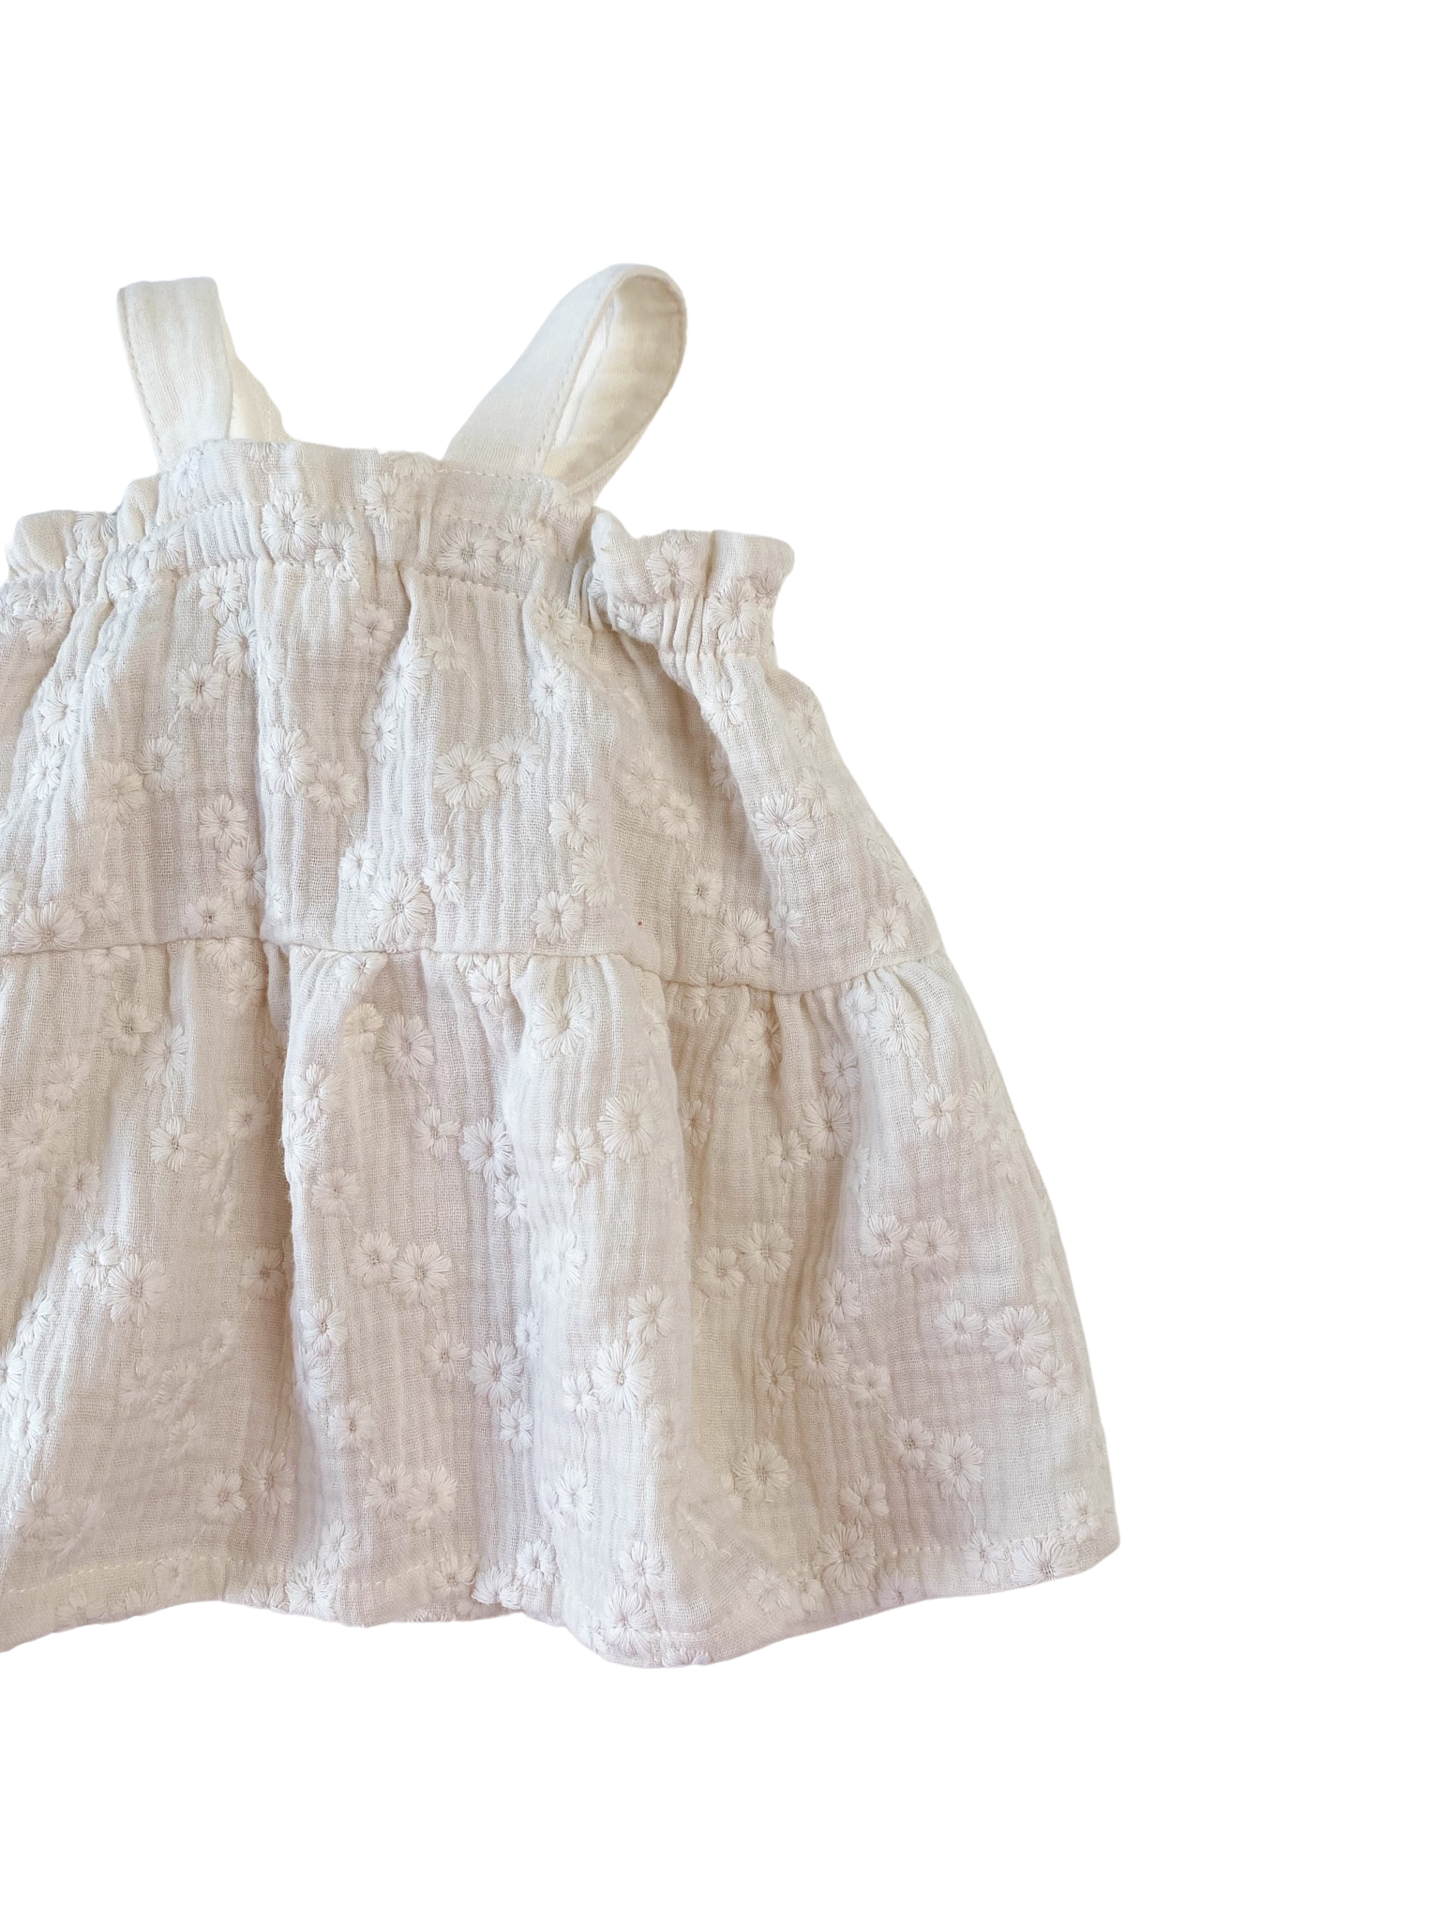 Baby dress / embroidered muslin - ecru